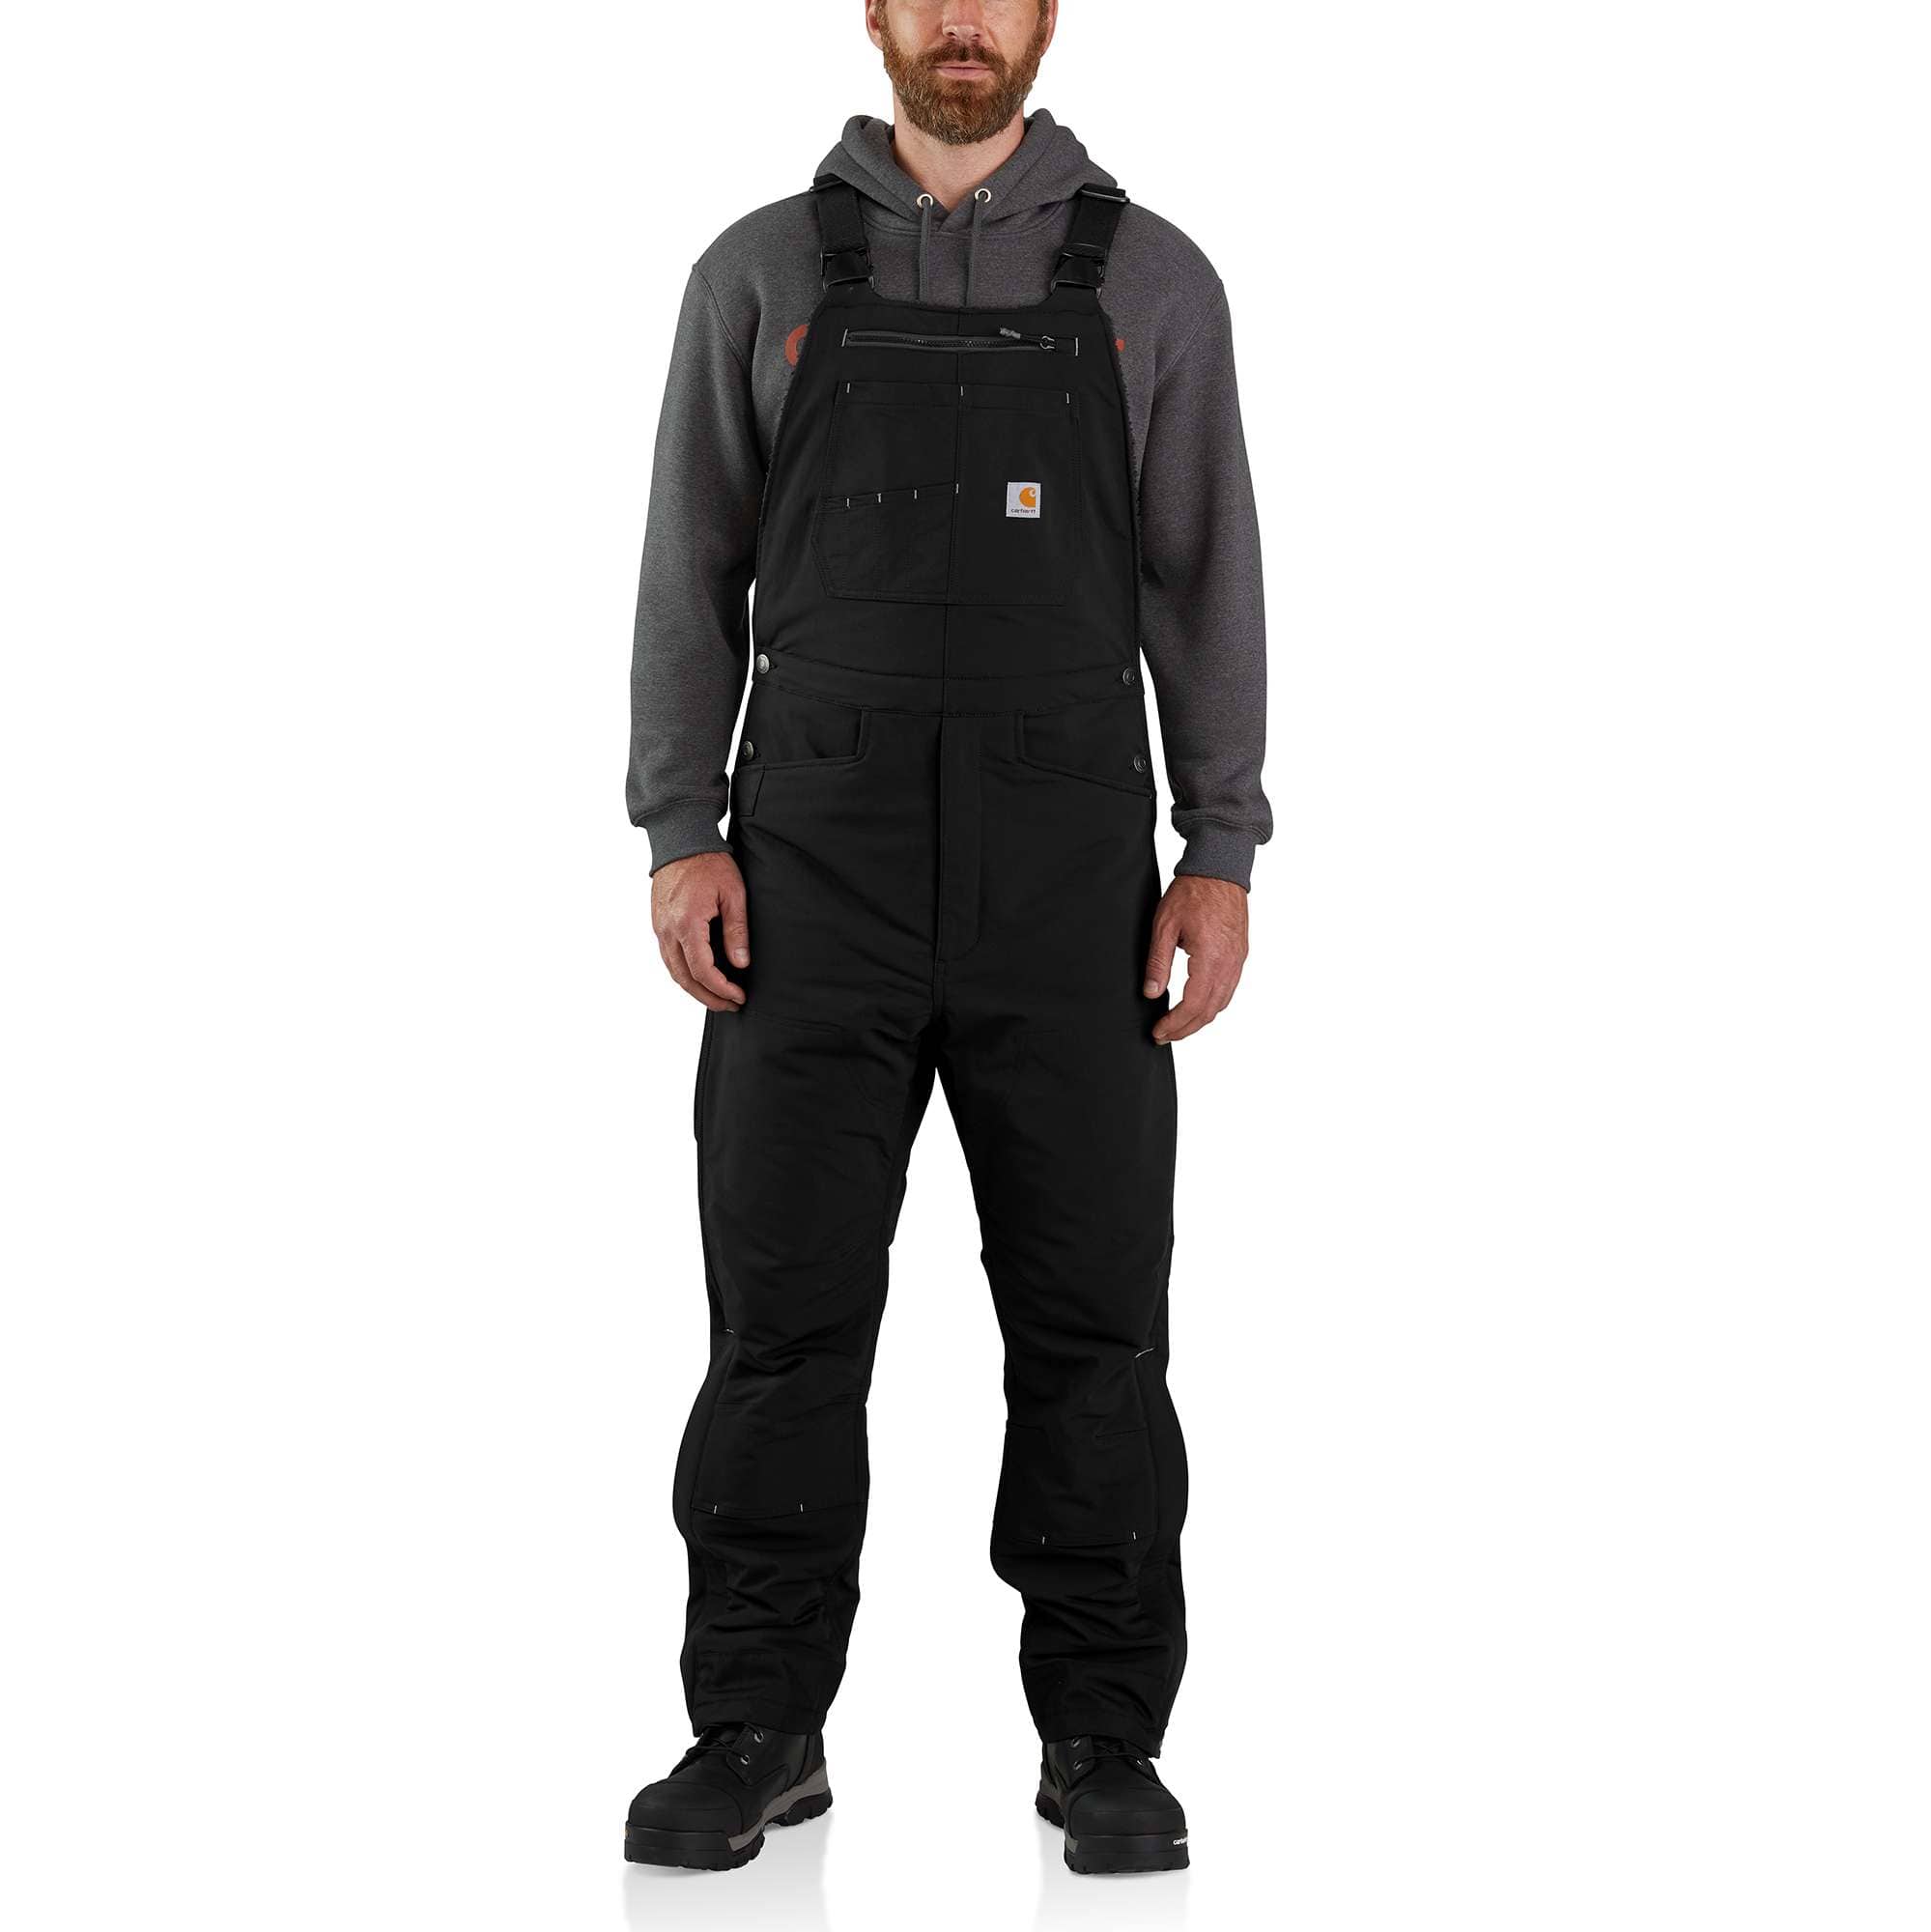 bleach dyed carhartt overalls fit  Streetwear men outfits, Carhartt  overalls, Carhartt mens fashion